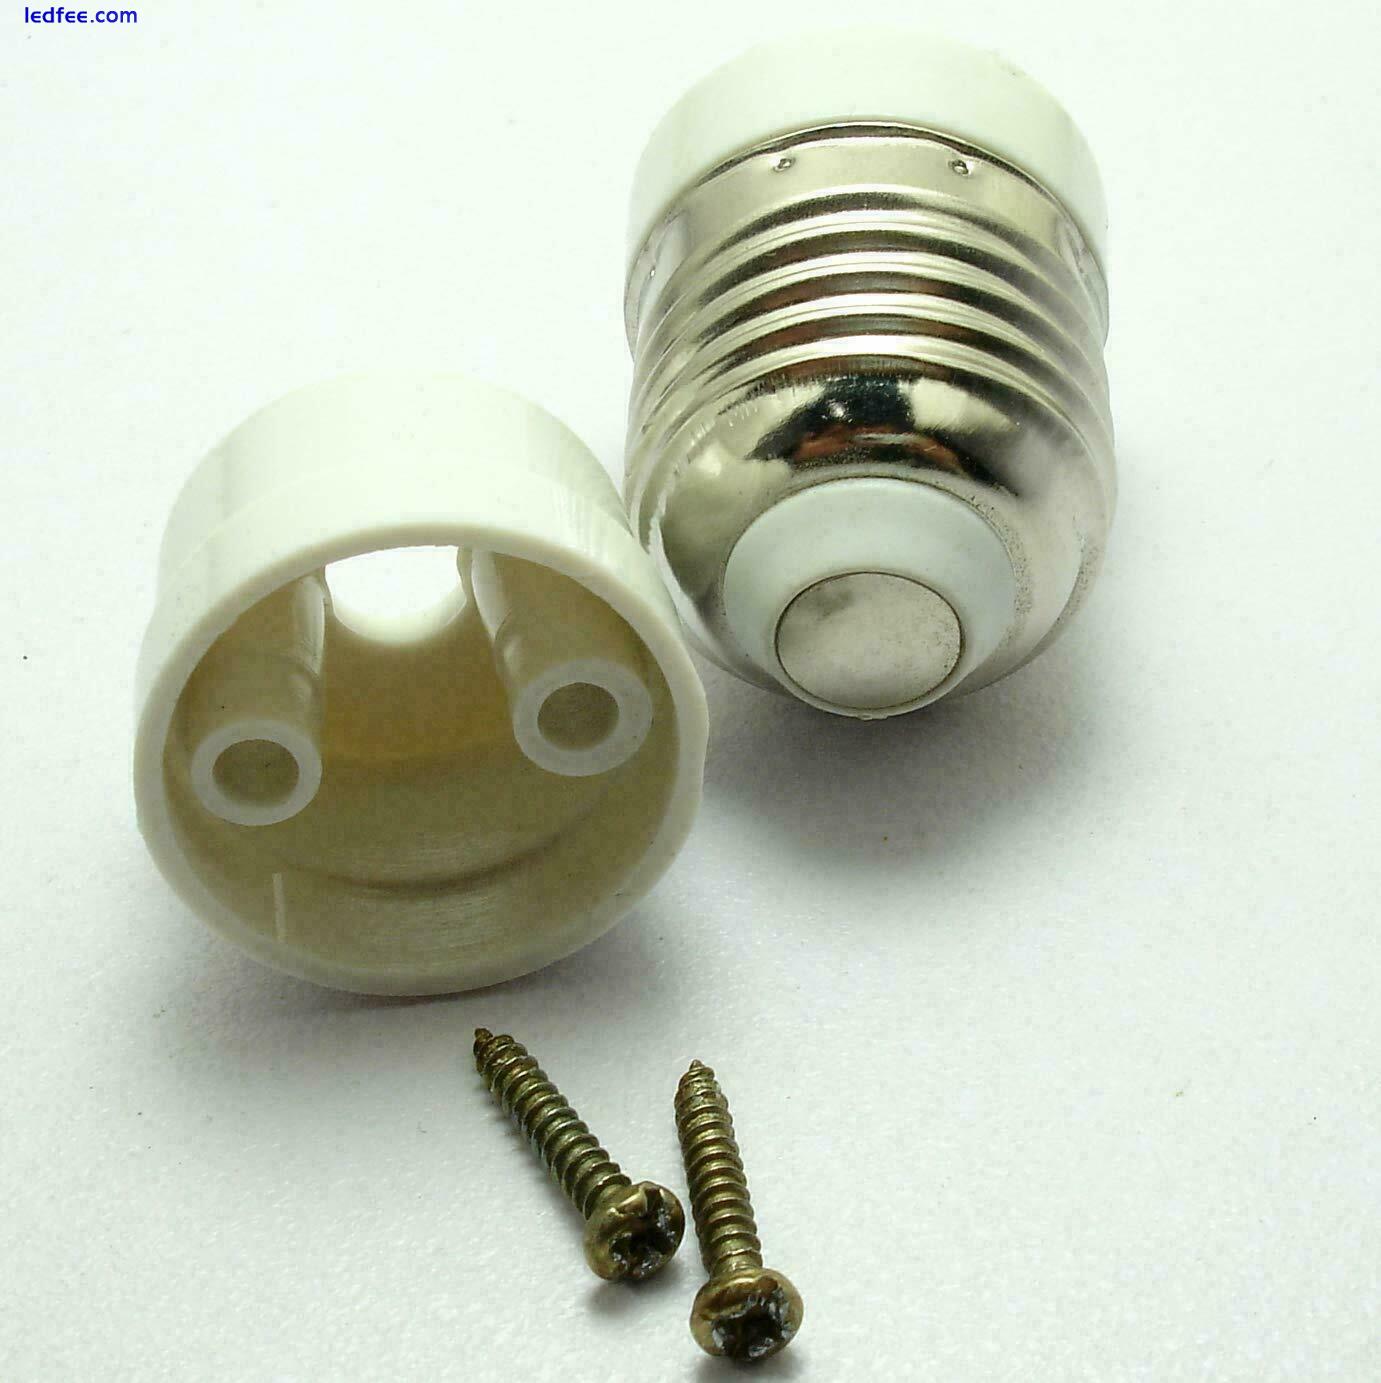 E27 Adaptor Plug Connector Lamp Socket Extension Edison Screw Light Bulb Holder 5 